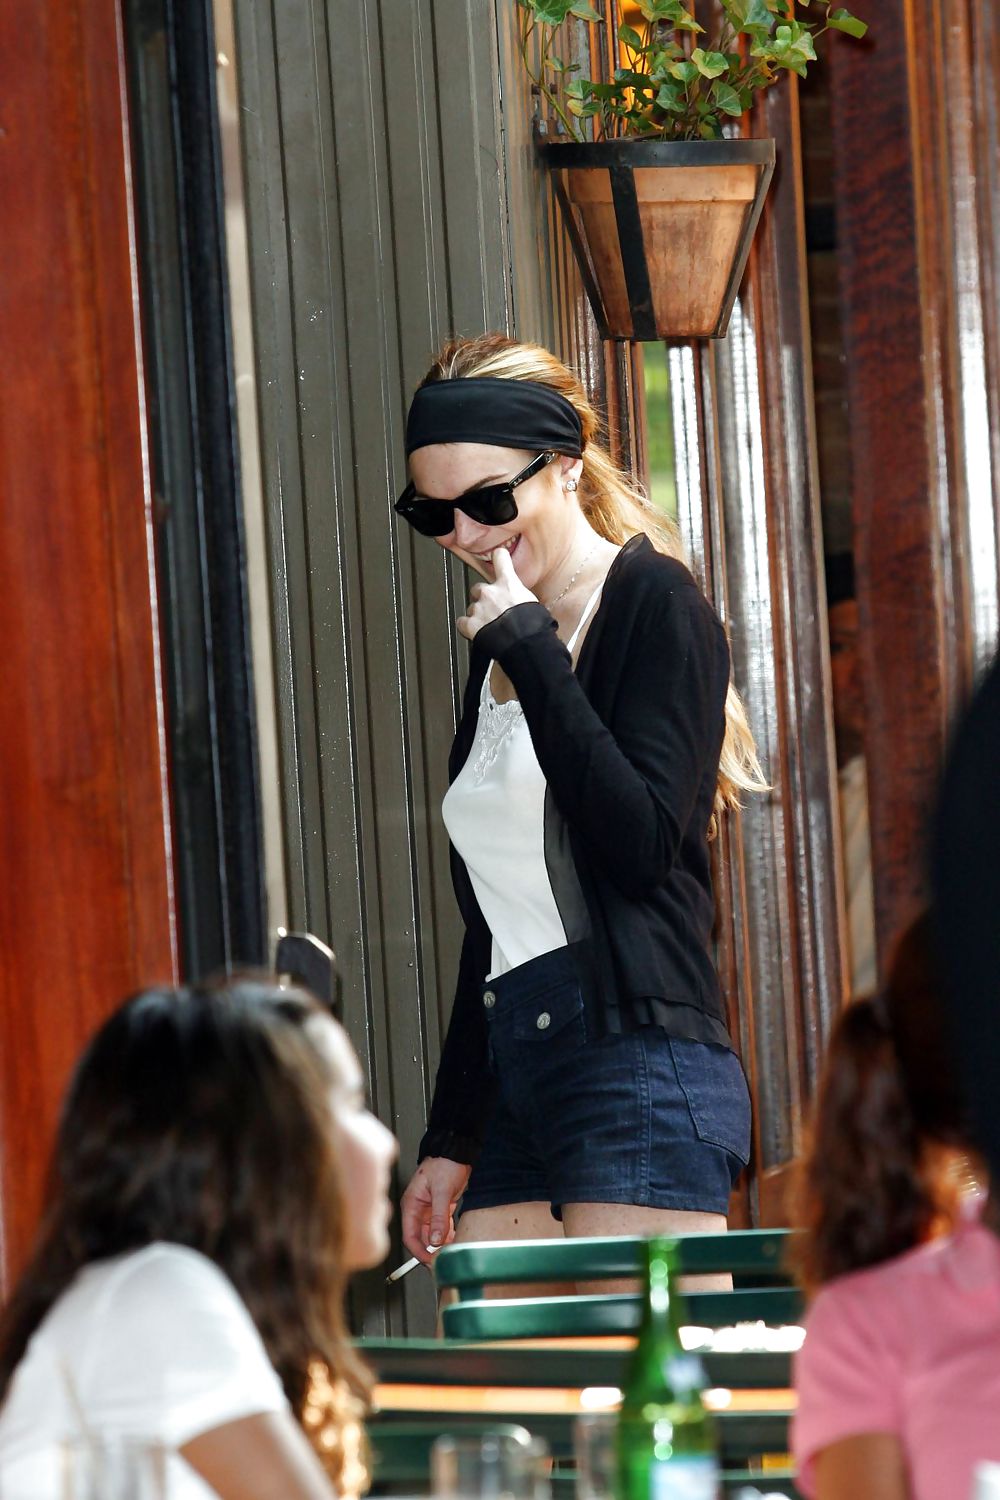 Lindsay Lohan is leggy smoking a cigarette in denim shorts #3647115